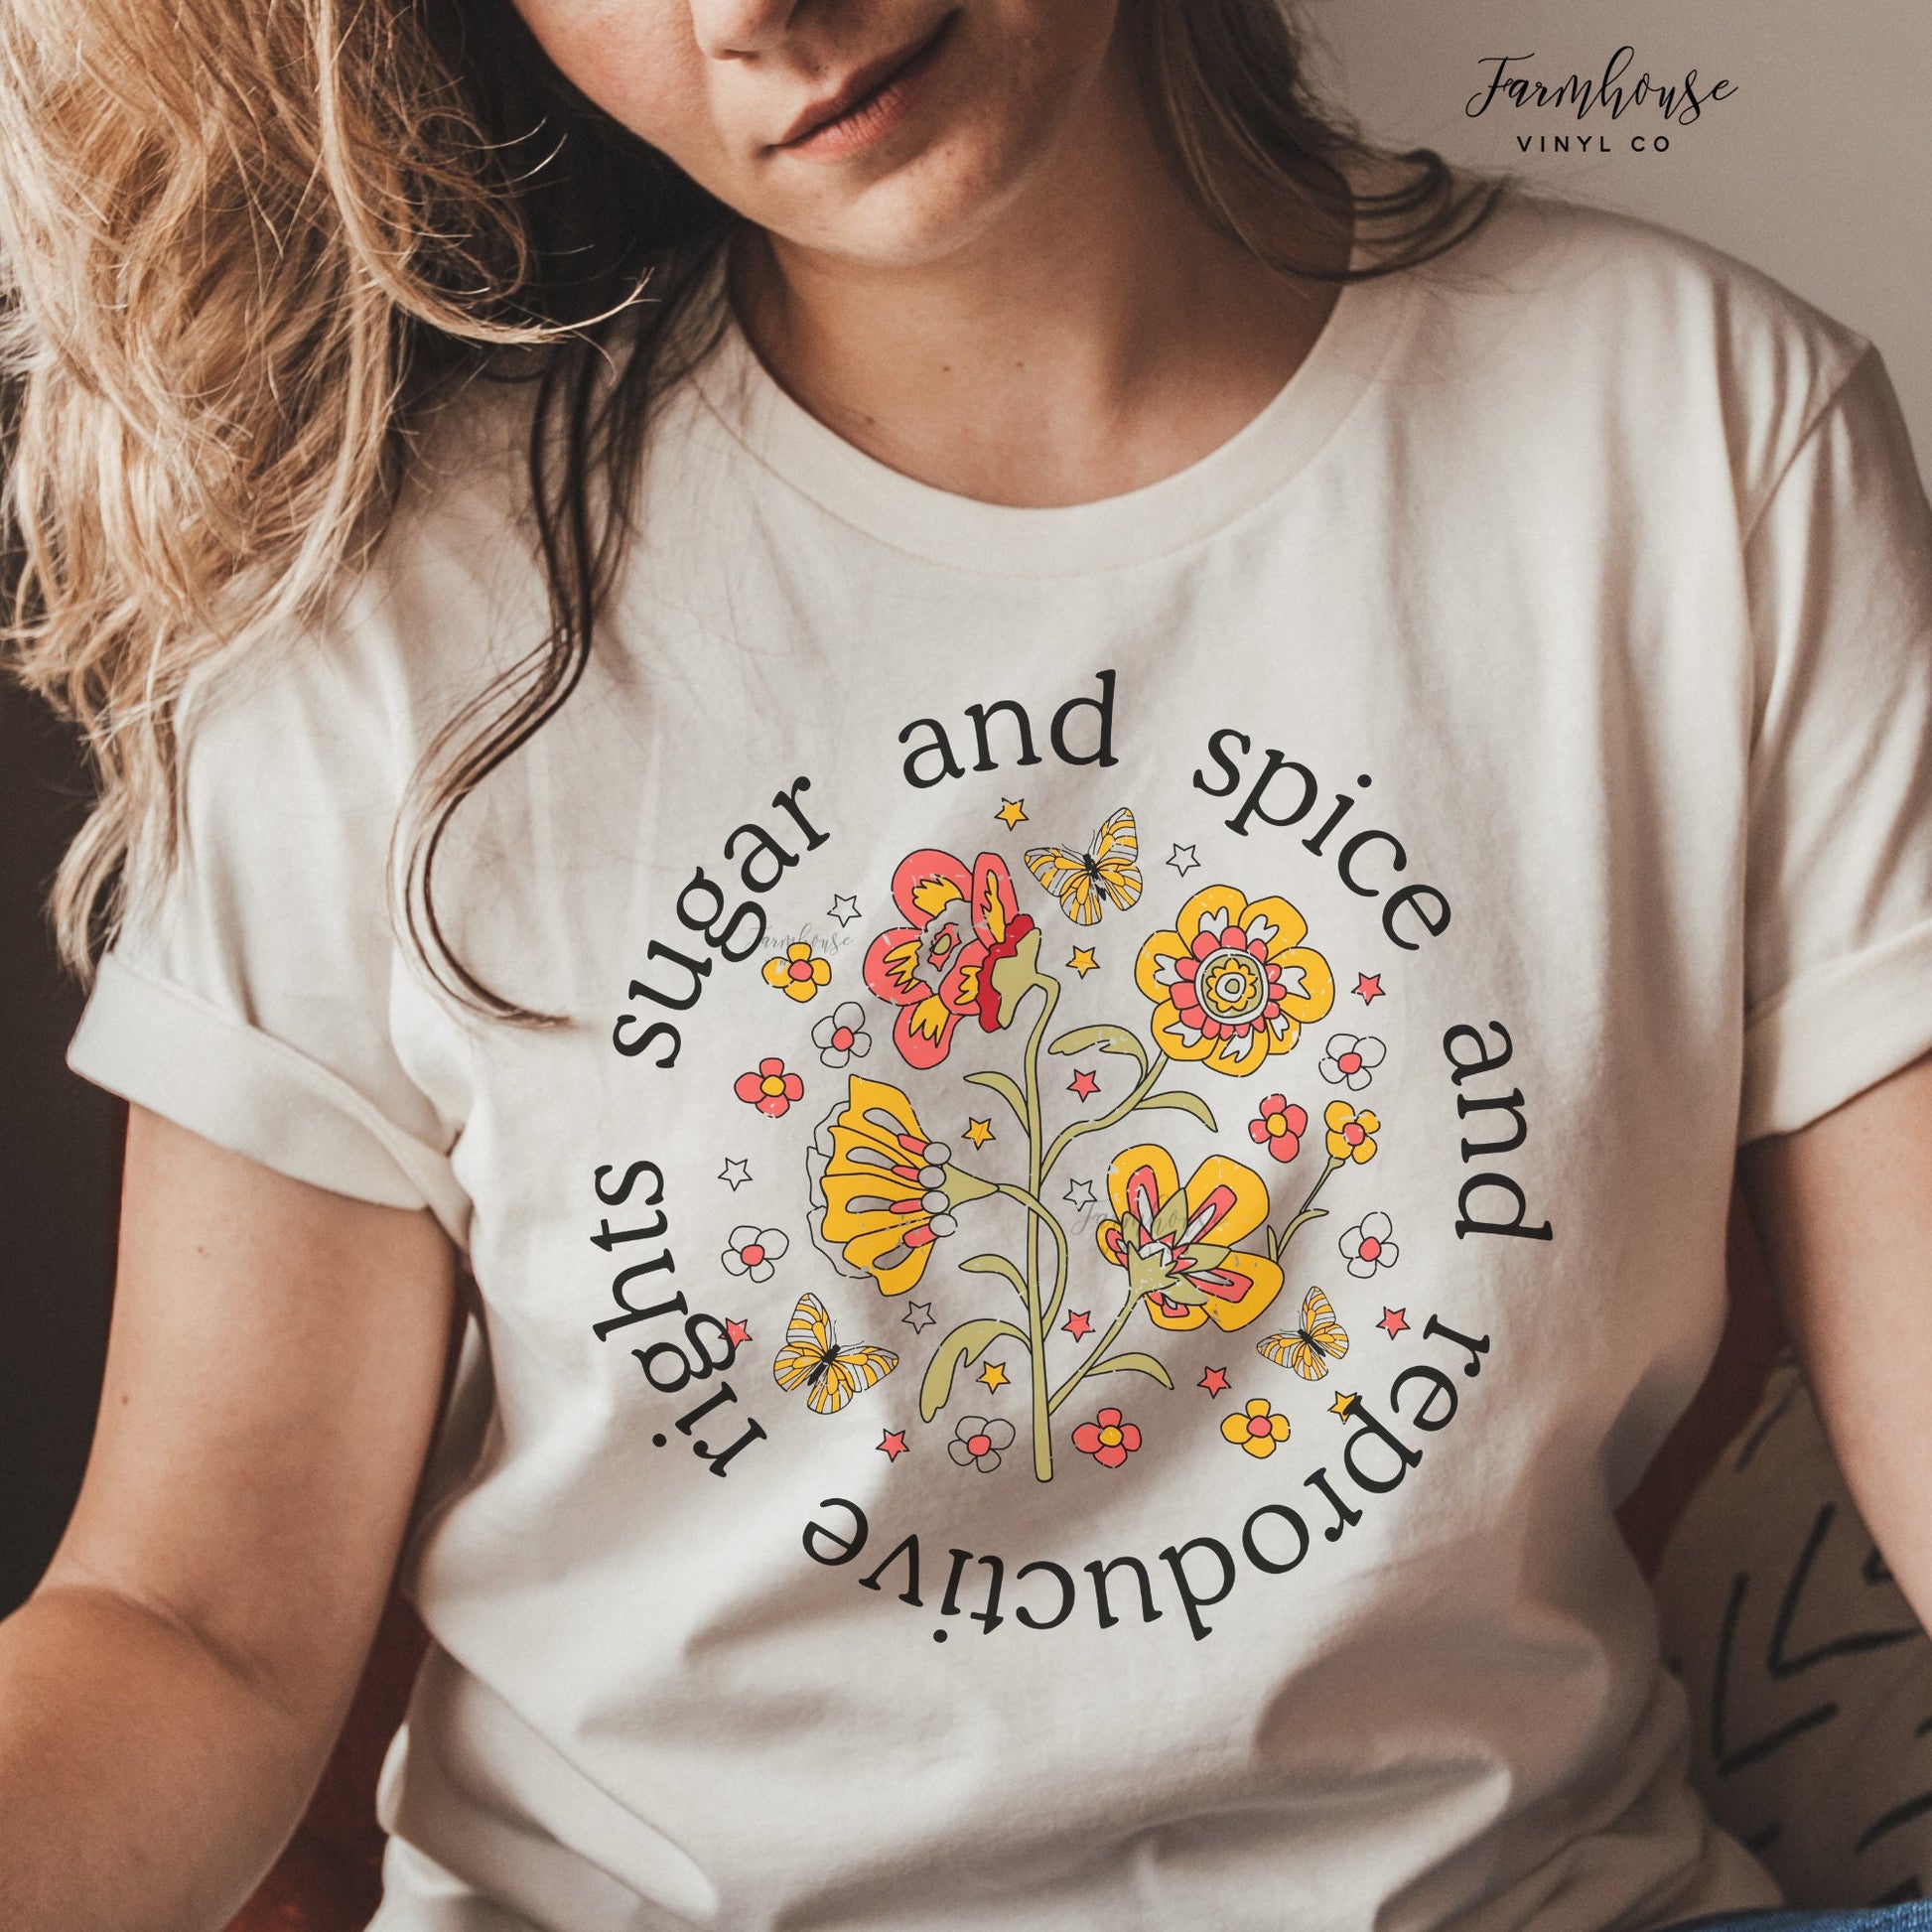 Sugar & Spice and Reproductive Rights Shirt - Farmhouse Vinyl Co